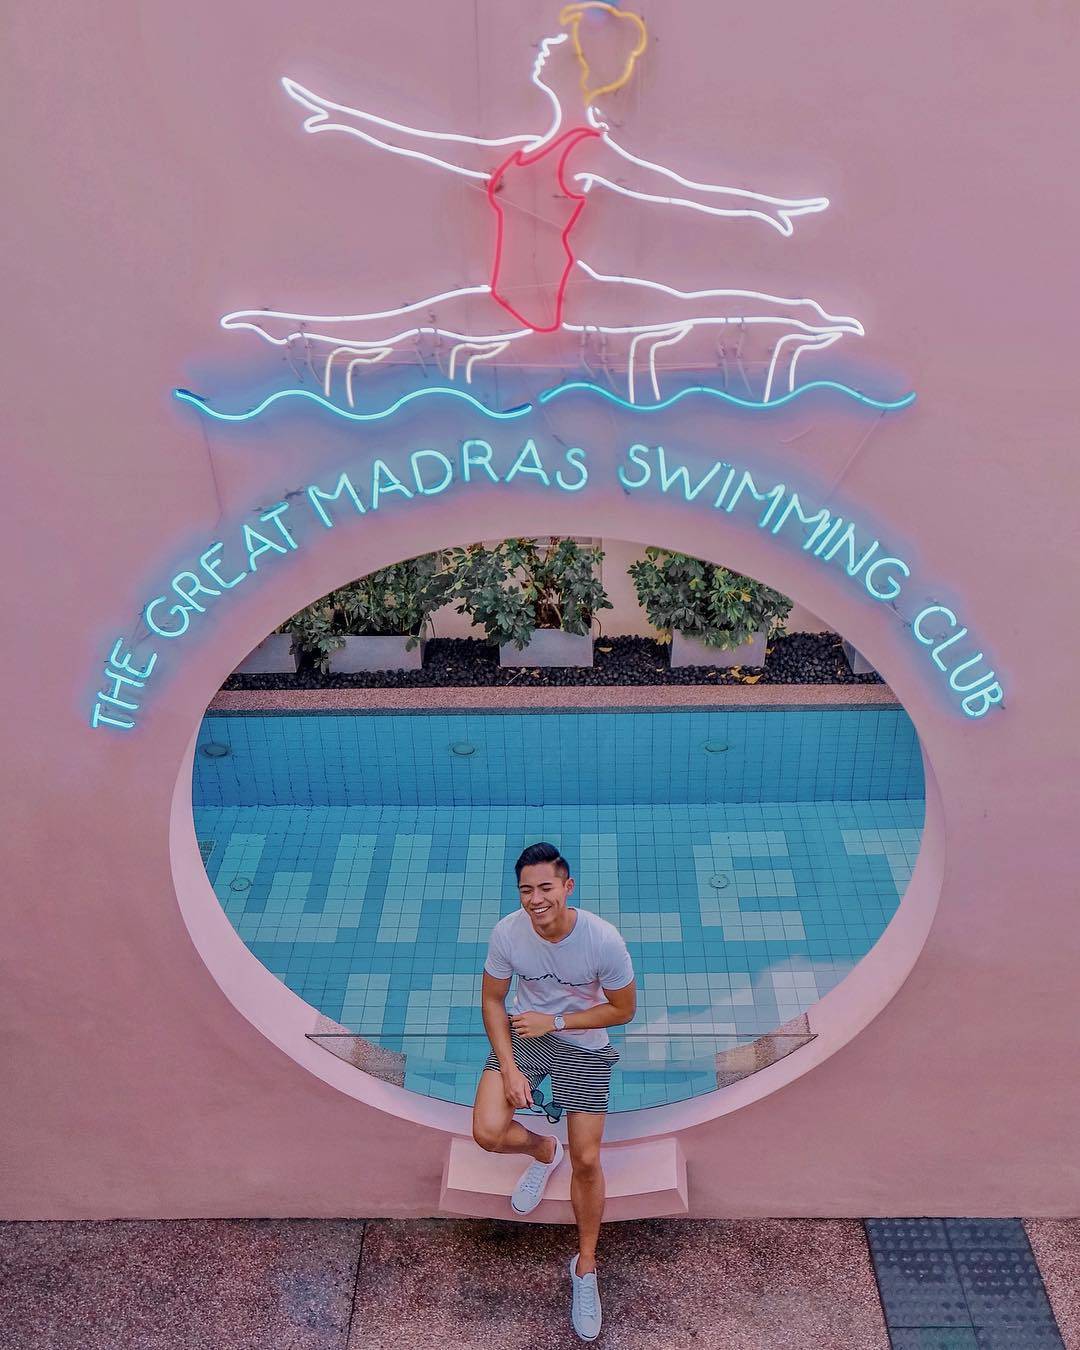 Ins風滿滿📷The Great Madras酒店複古時髦，泳池粉紅外牆超好拍⛱享受國外度假Feel☀